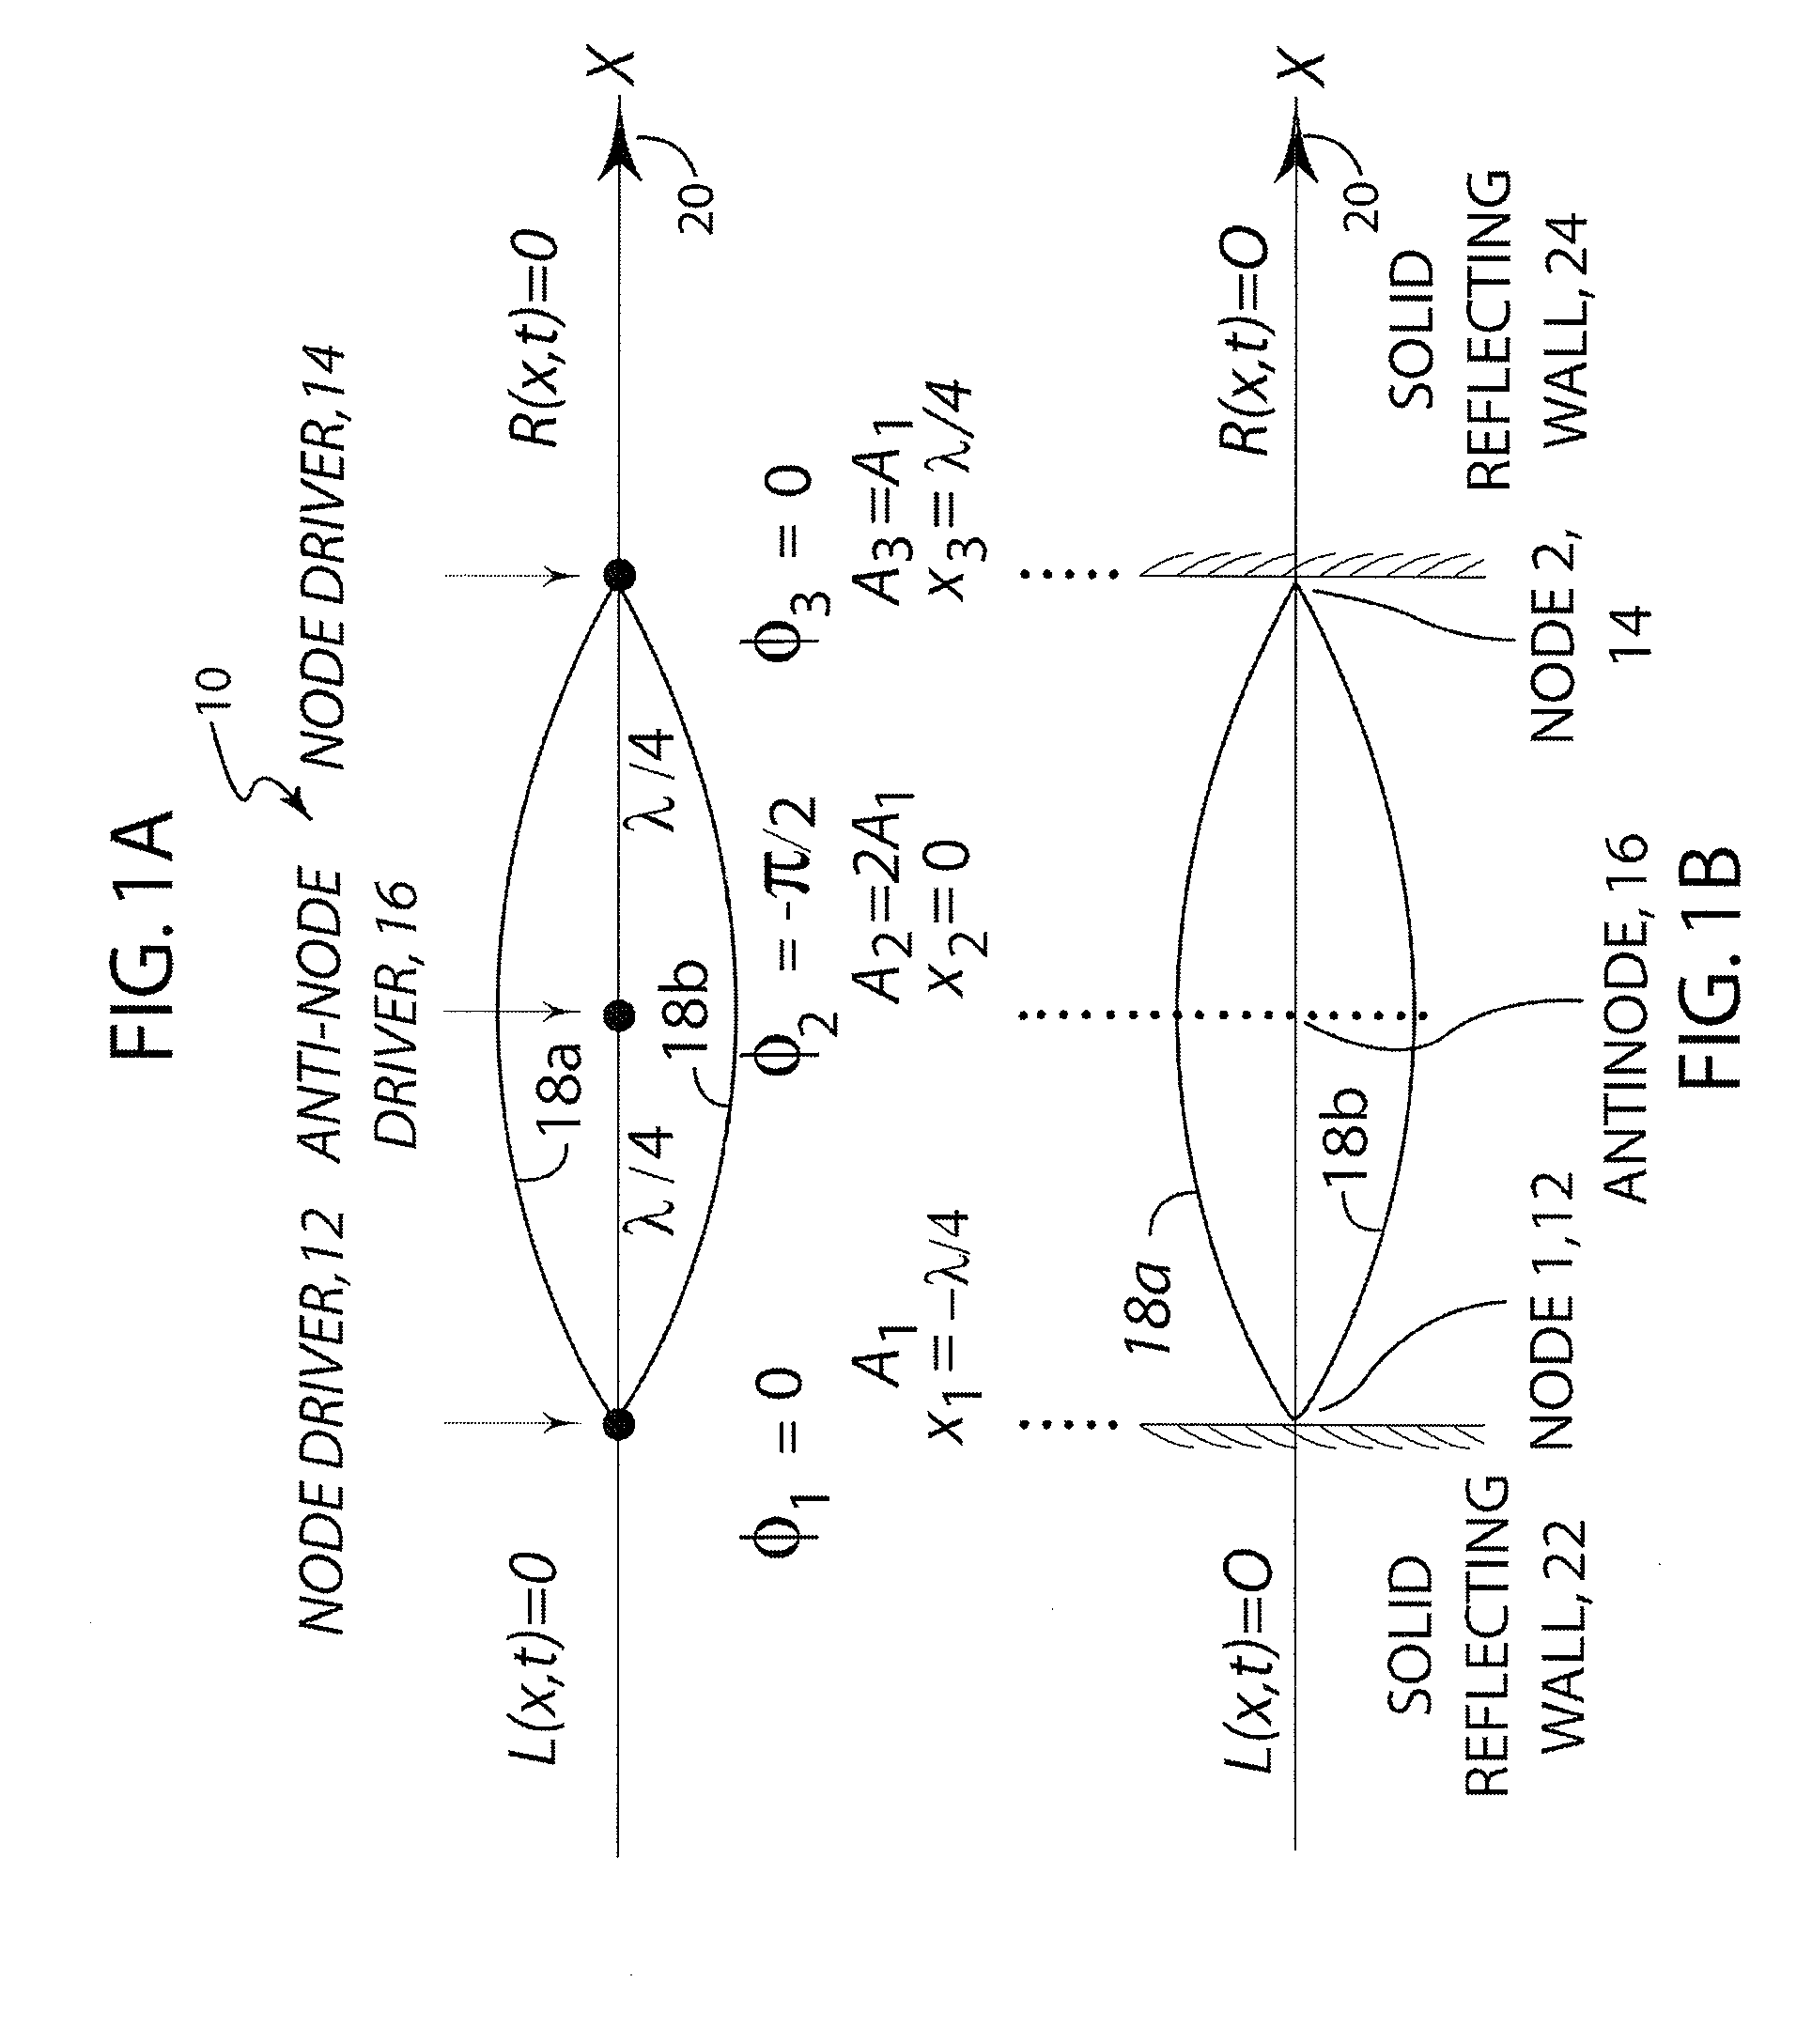 High retardation-amplitude photoelastic modulator